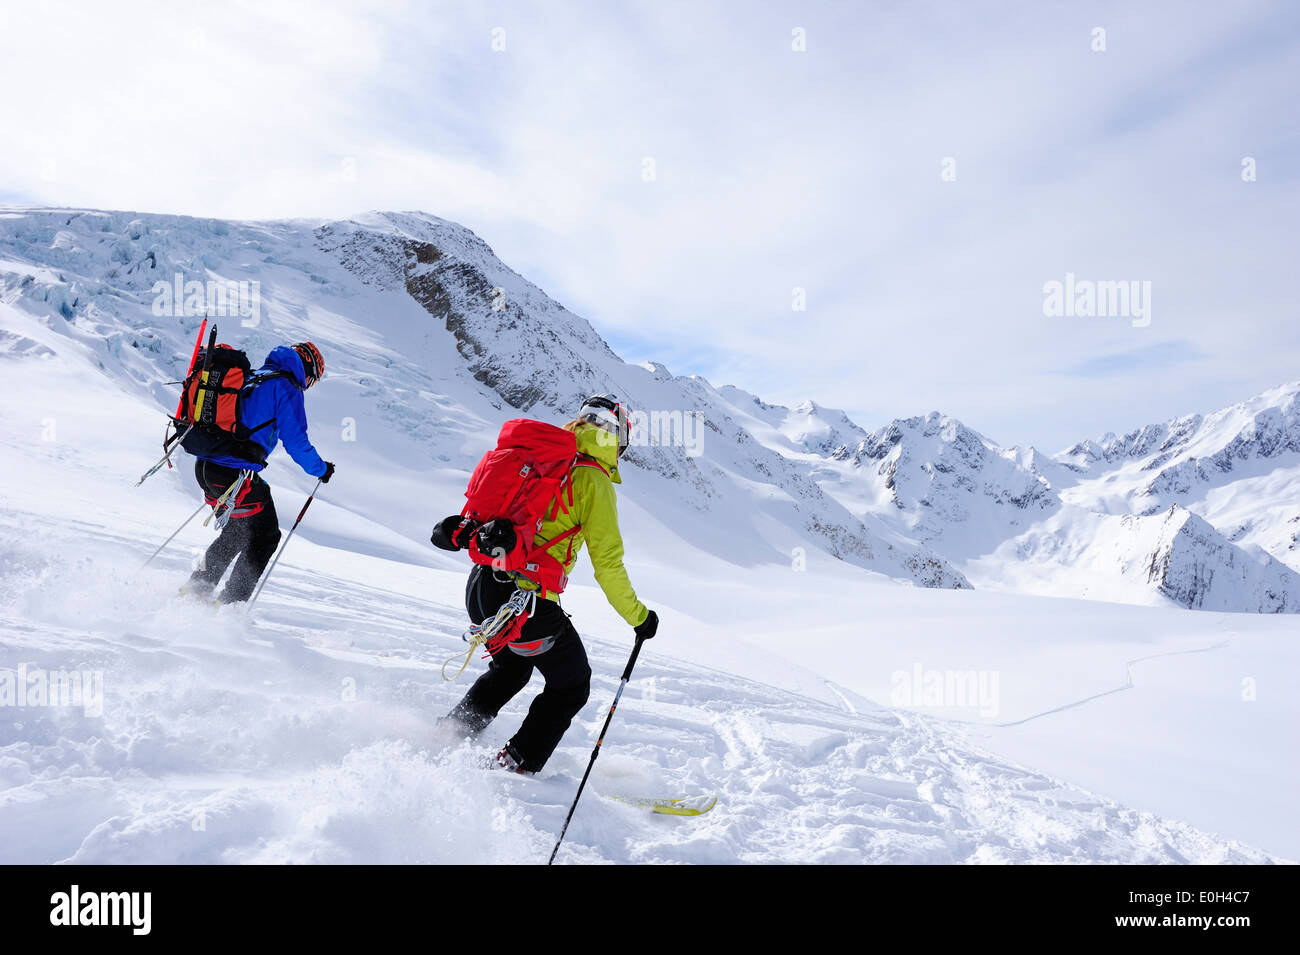 Two skiers downhill skiing from mount Wildspitzer on glacier, Oetztal Alps, Tyrol, Austria Stock Photo